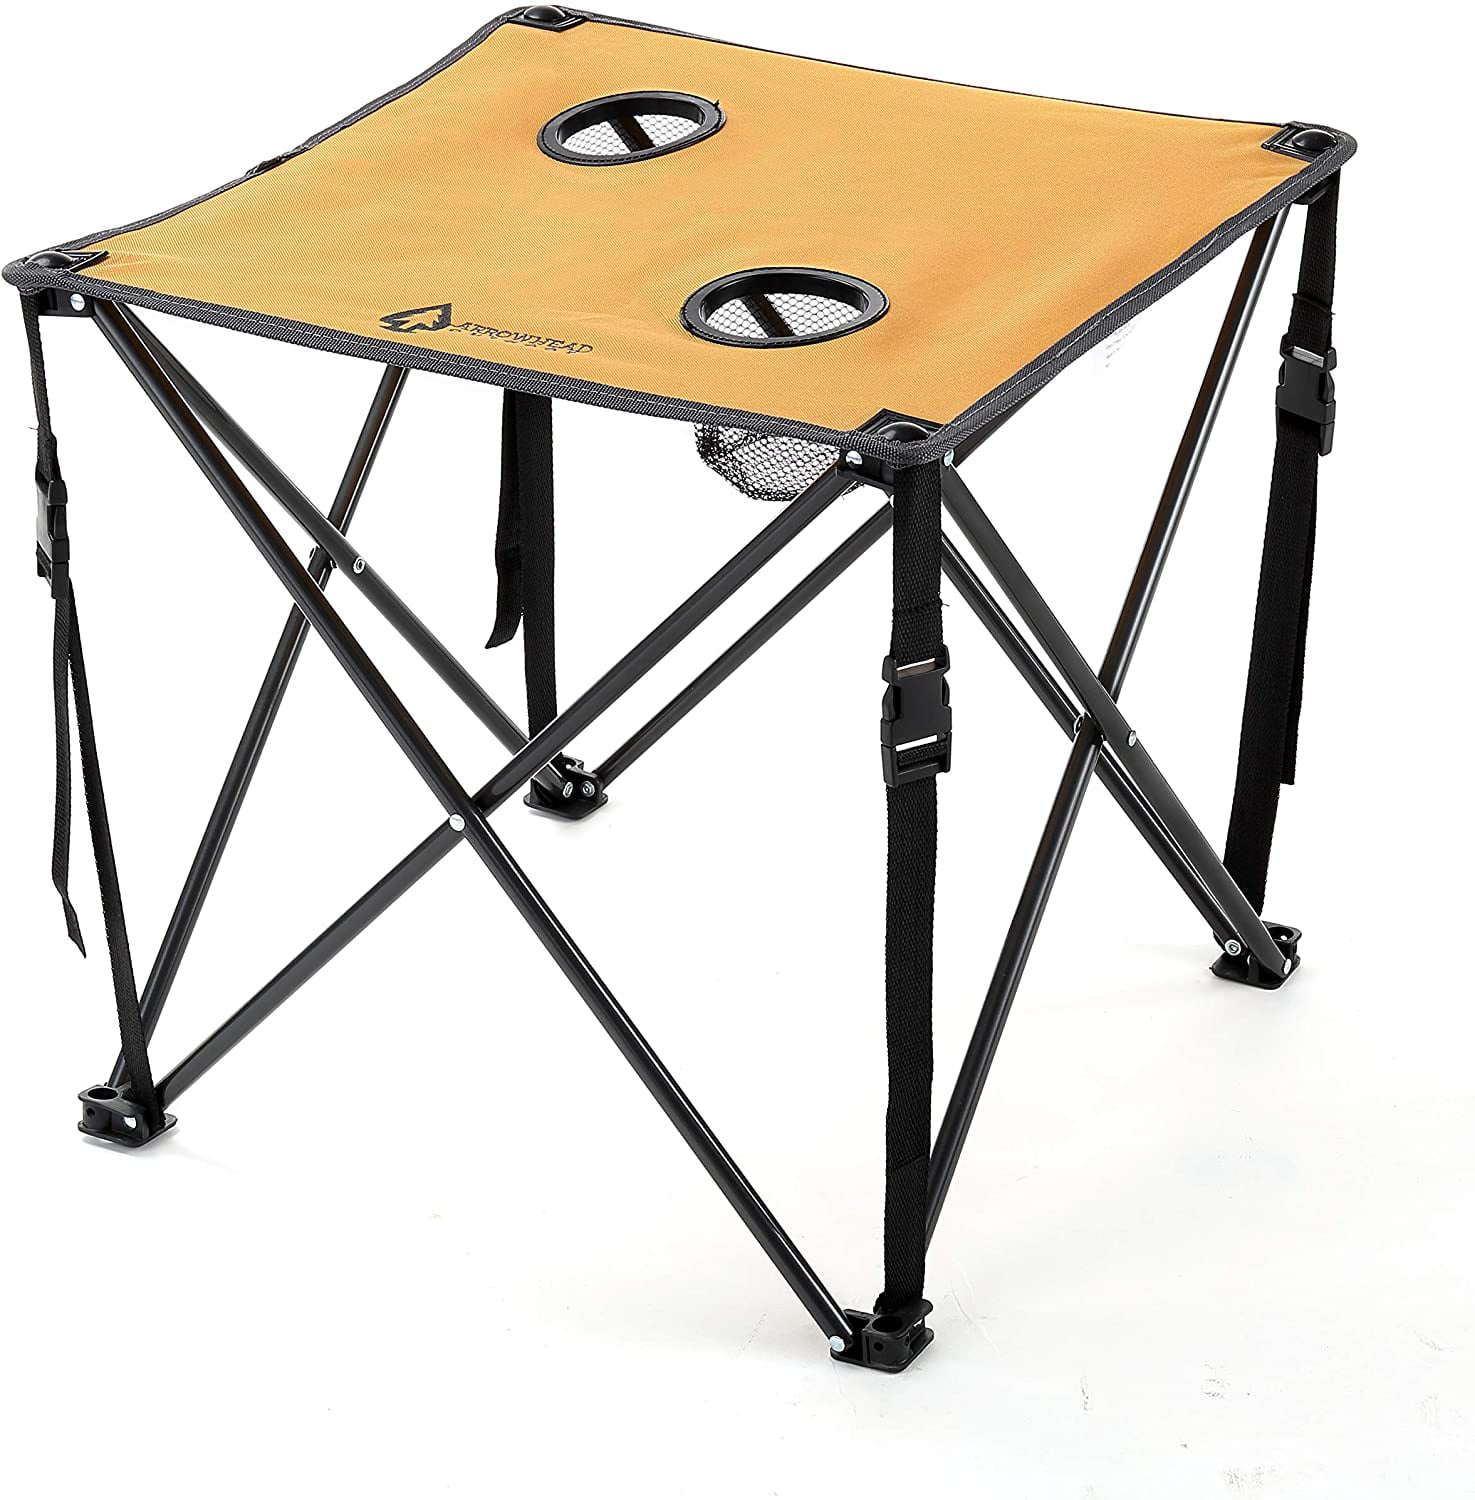 ARROWHEAD OUTDOOR HeavyDuty Portable Foldable Camping Table w/ 2 Cup